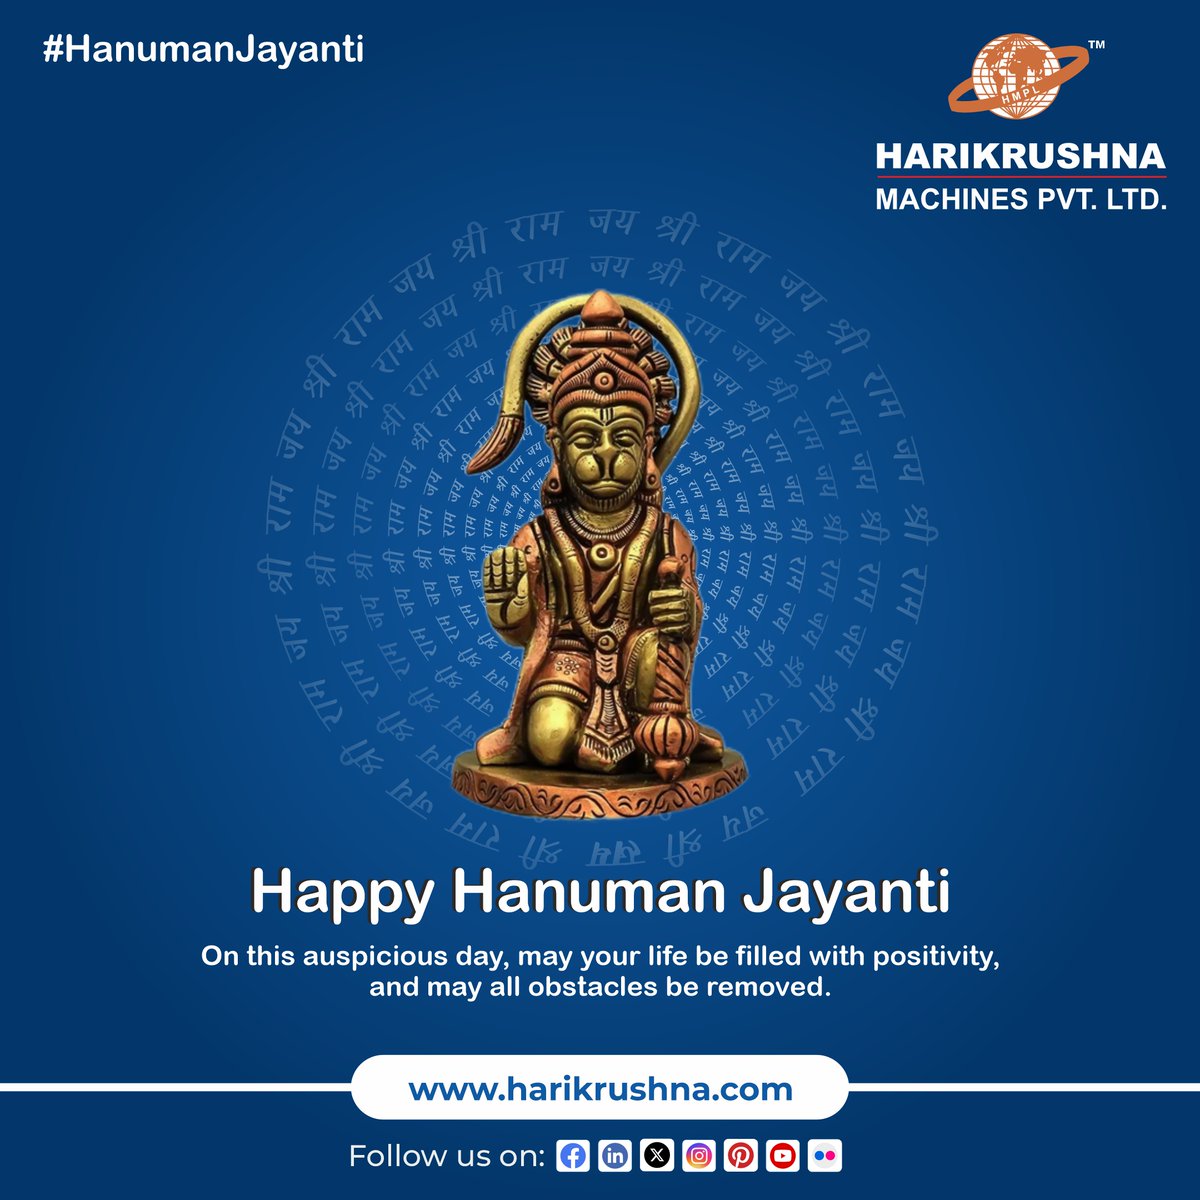 Wishing all a joyous Shri Hanuman Jayanti! 

May Lord Hanuman's blessings of Ashta Siddhis and Nav Nidhis bring peace, prosperity, and happiness to all. 🙏🕉️ 

#HanumanJayanti  #Blessings #PeaceAndProsperity #HanumanJanmotsav